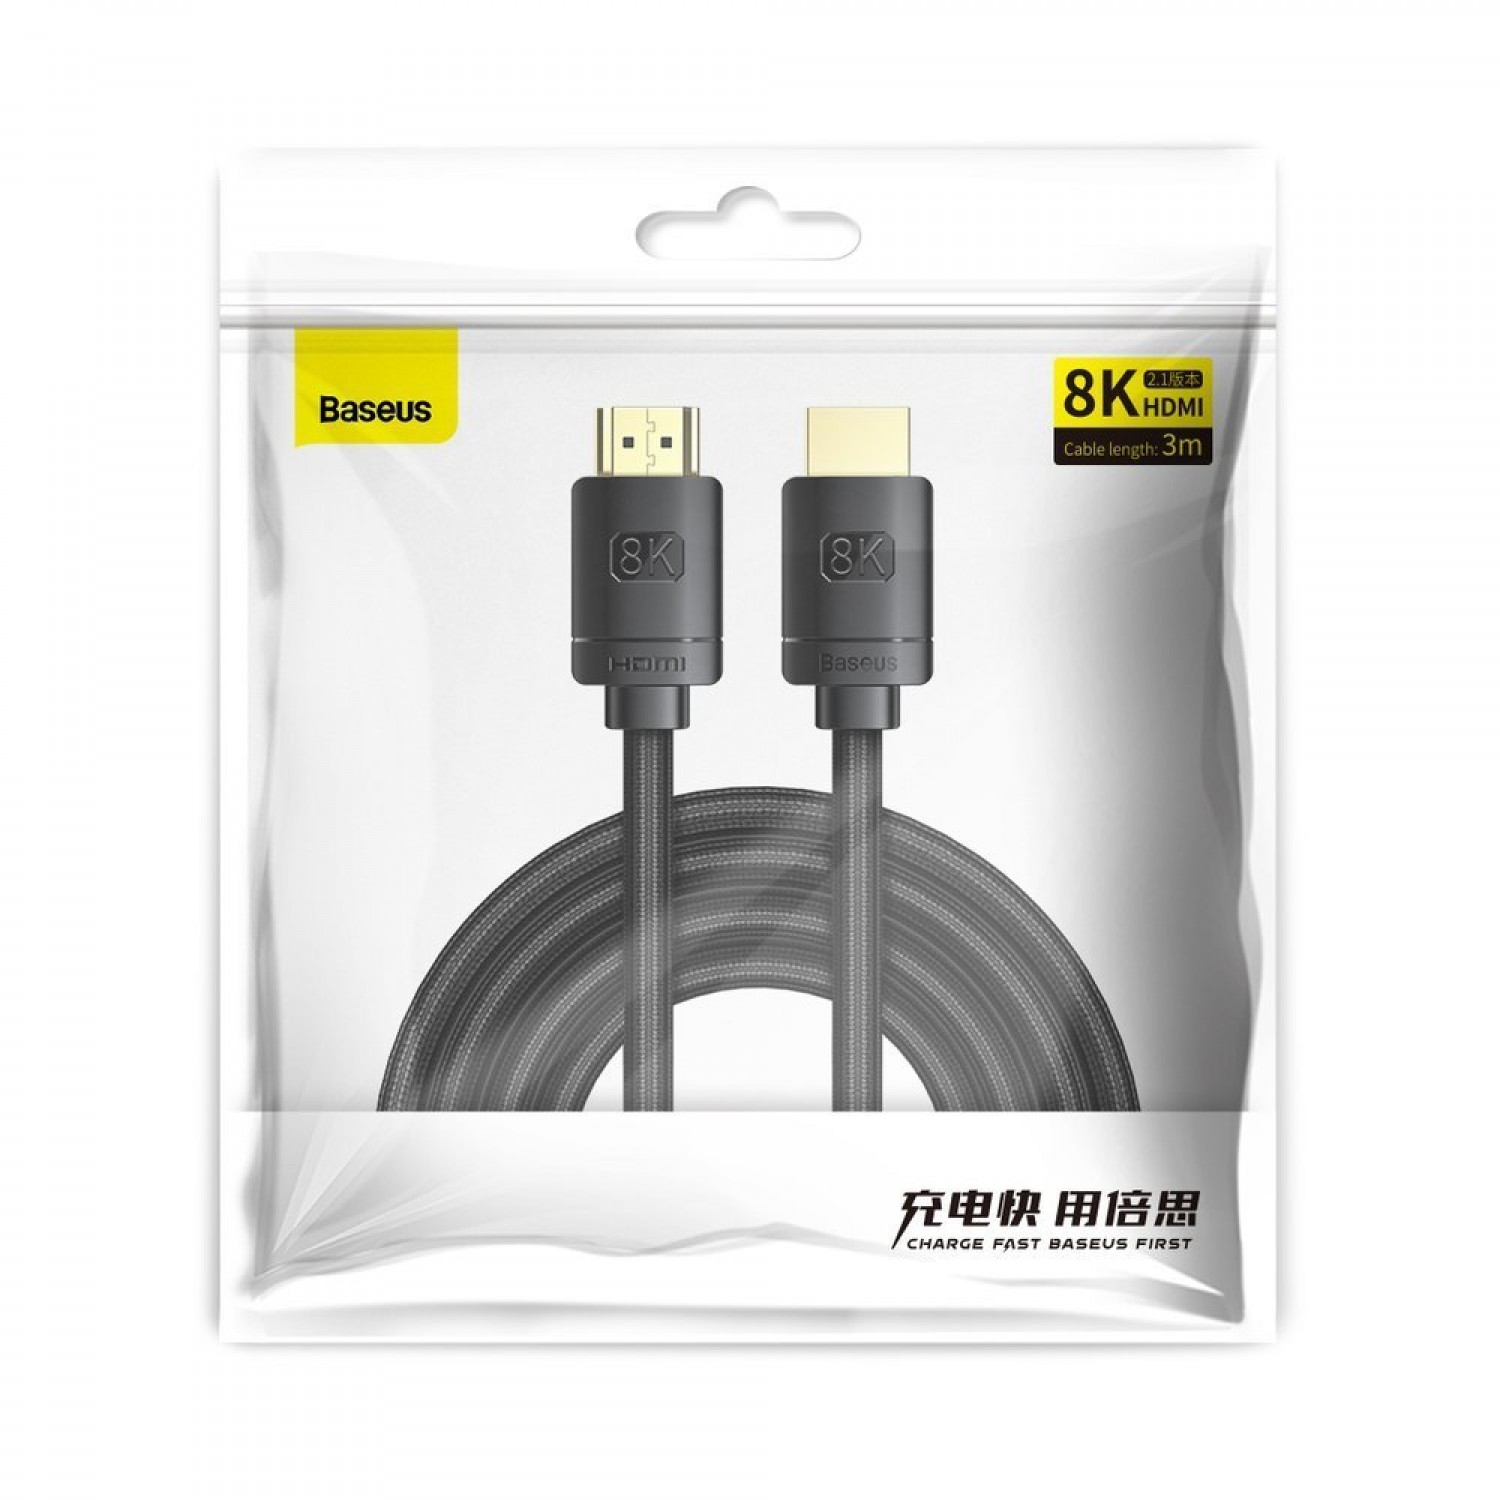 کابل HDMI (اچ دی ام آی) Baseus CAKGQ- L01 - 3M-1